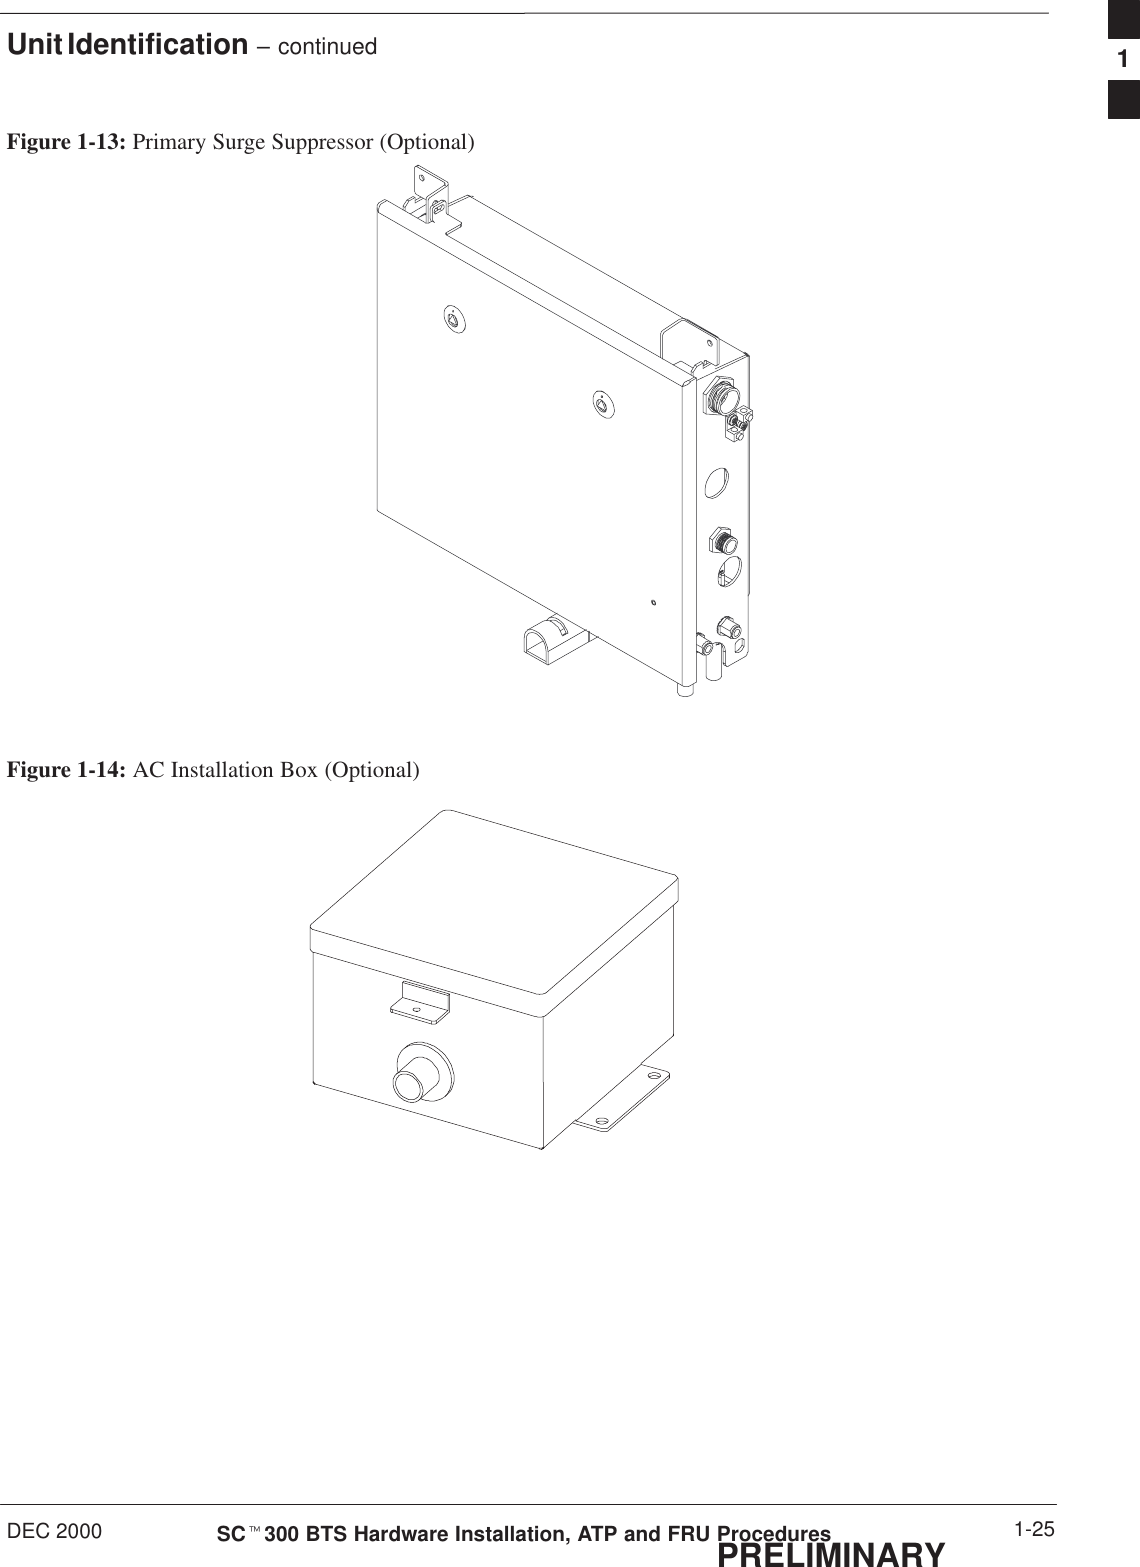 Unit Identification – continuedDEC 2000 1-25SCt300 BTS Hardware Installation, ATP and FRU ProceduresPRELIMINARYFigure 1-13: Primary Surge Suppressor (Optional)Figure 1-14: AC Installation Box (Optional)1